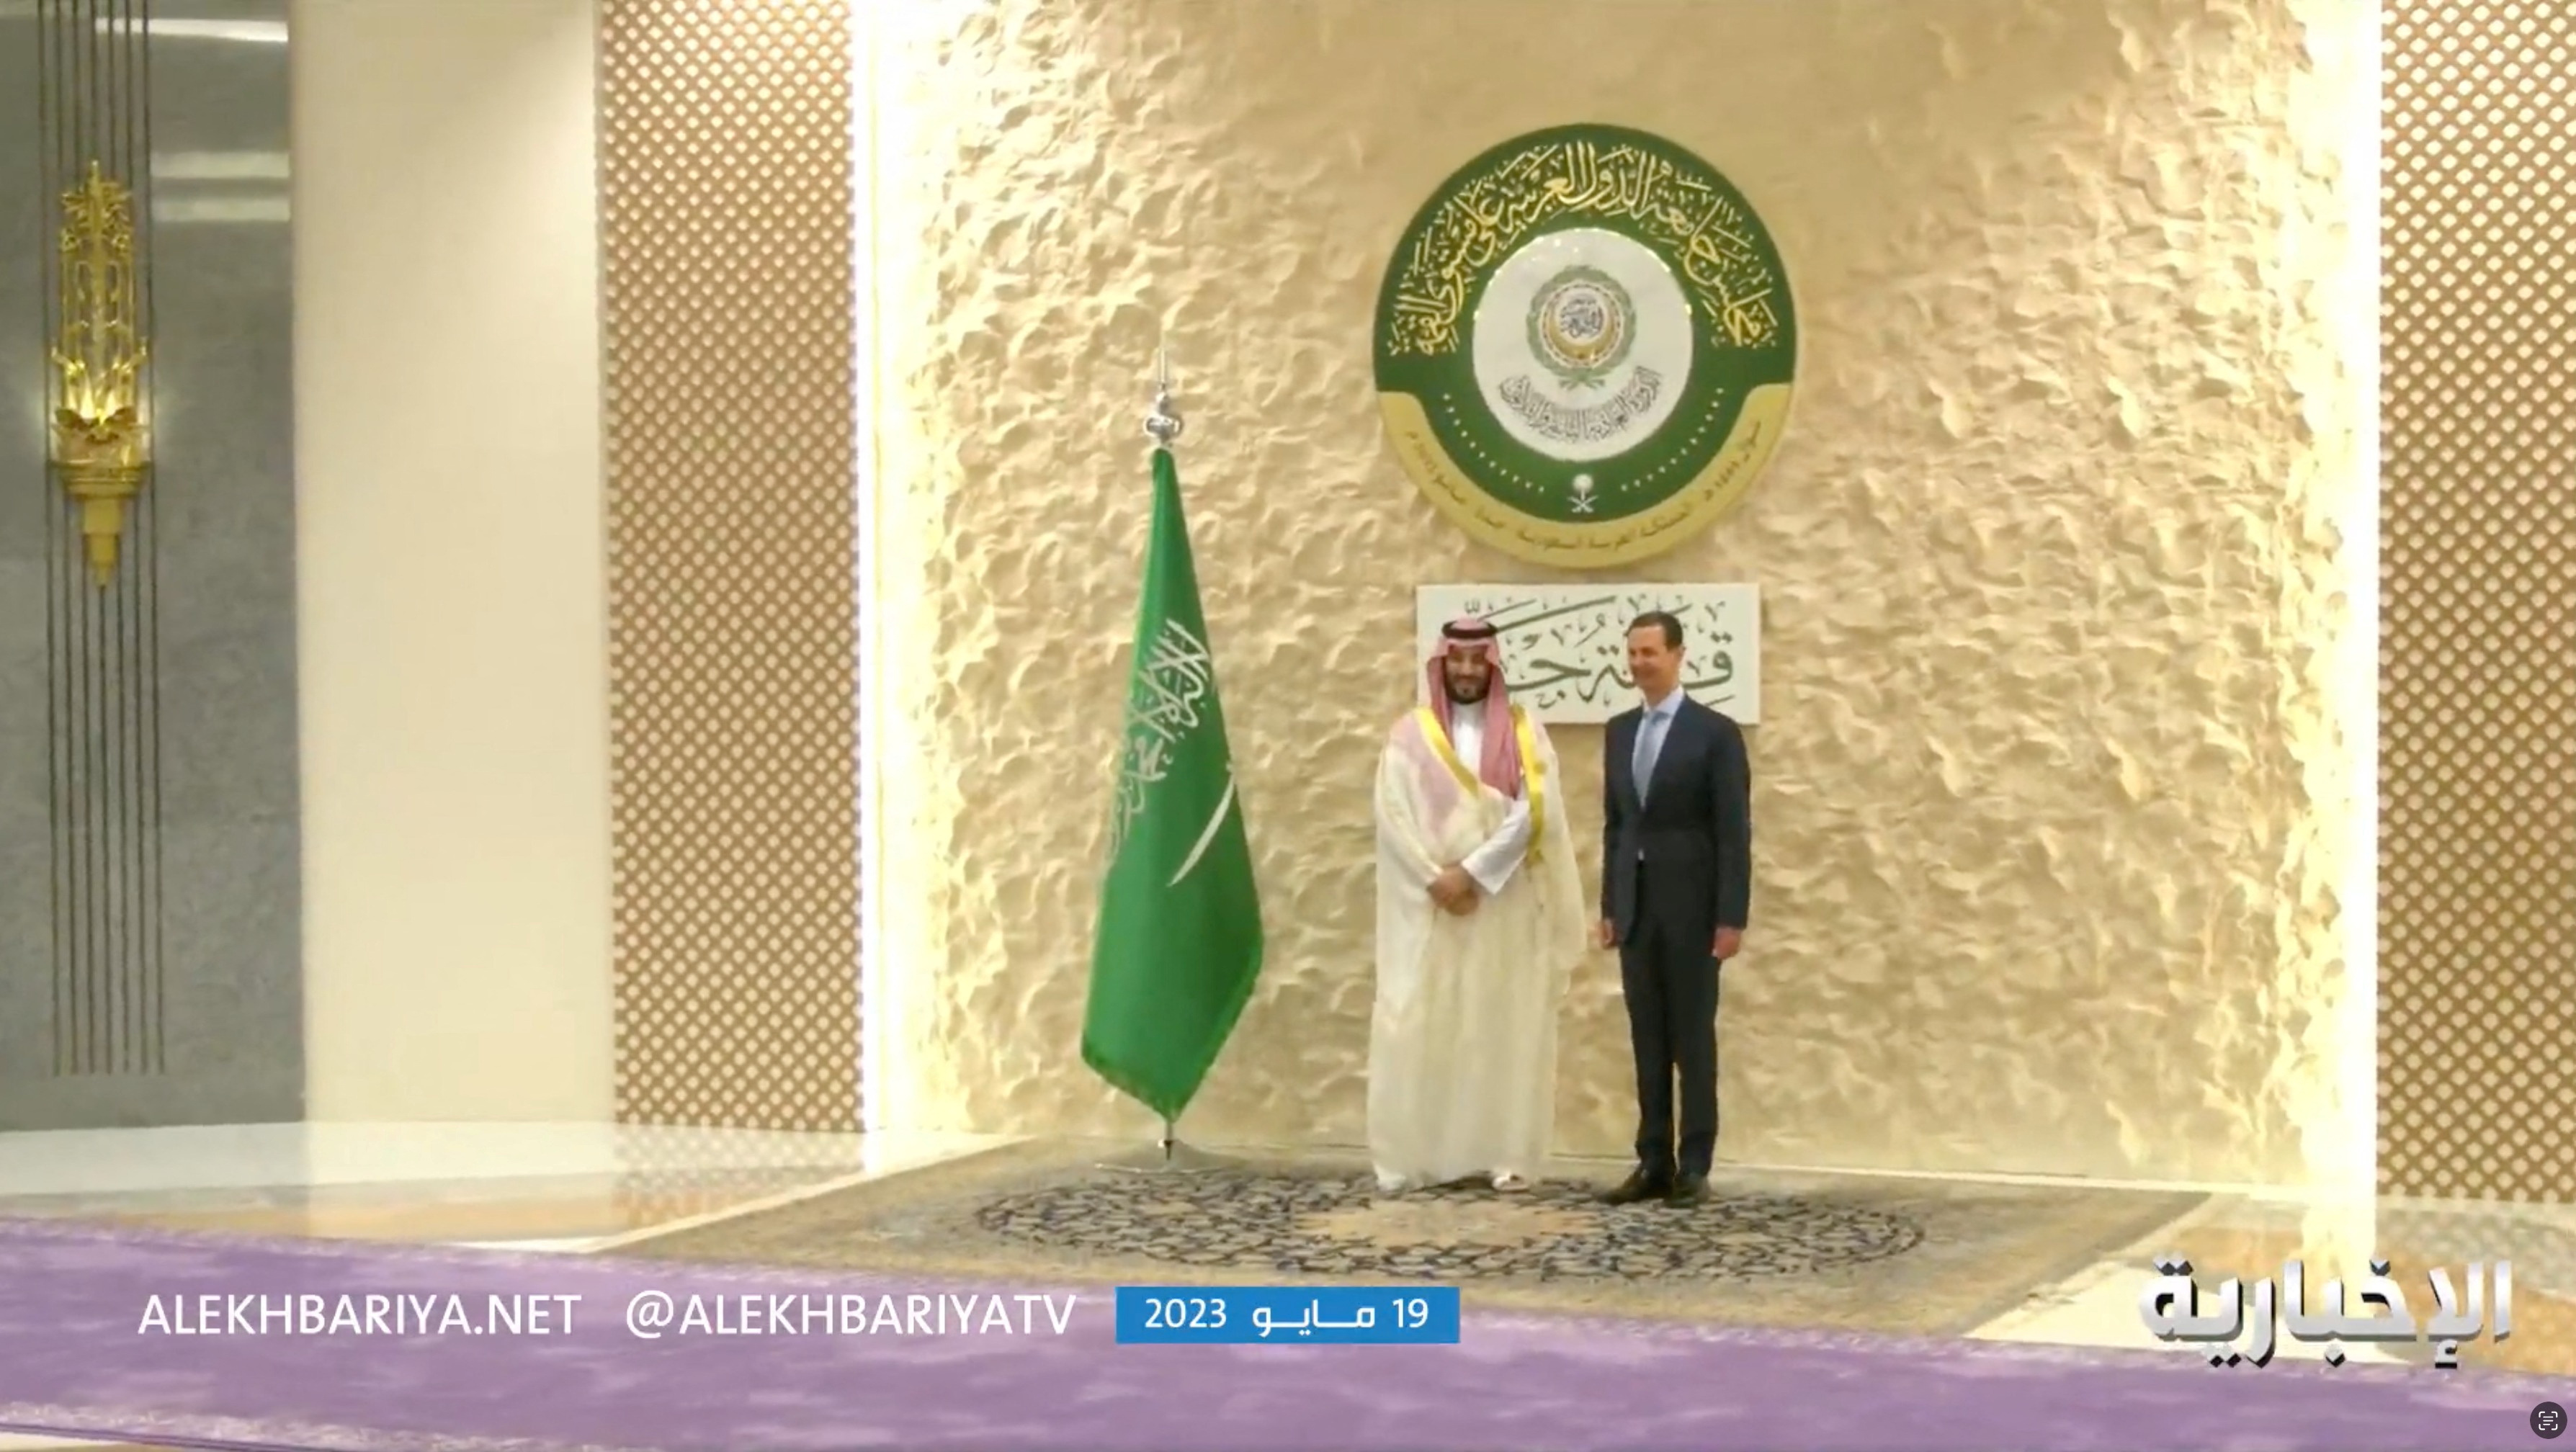 Saudi Arabia hosts the Arab League summit in Jeddah